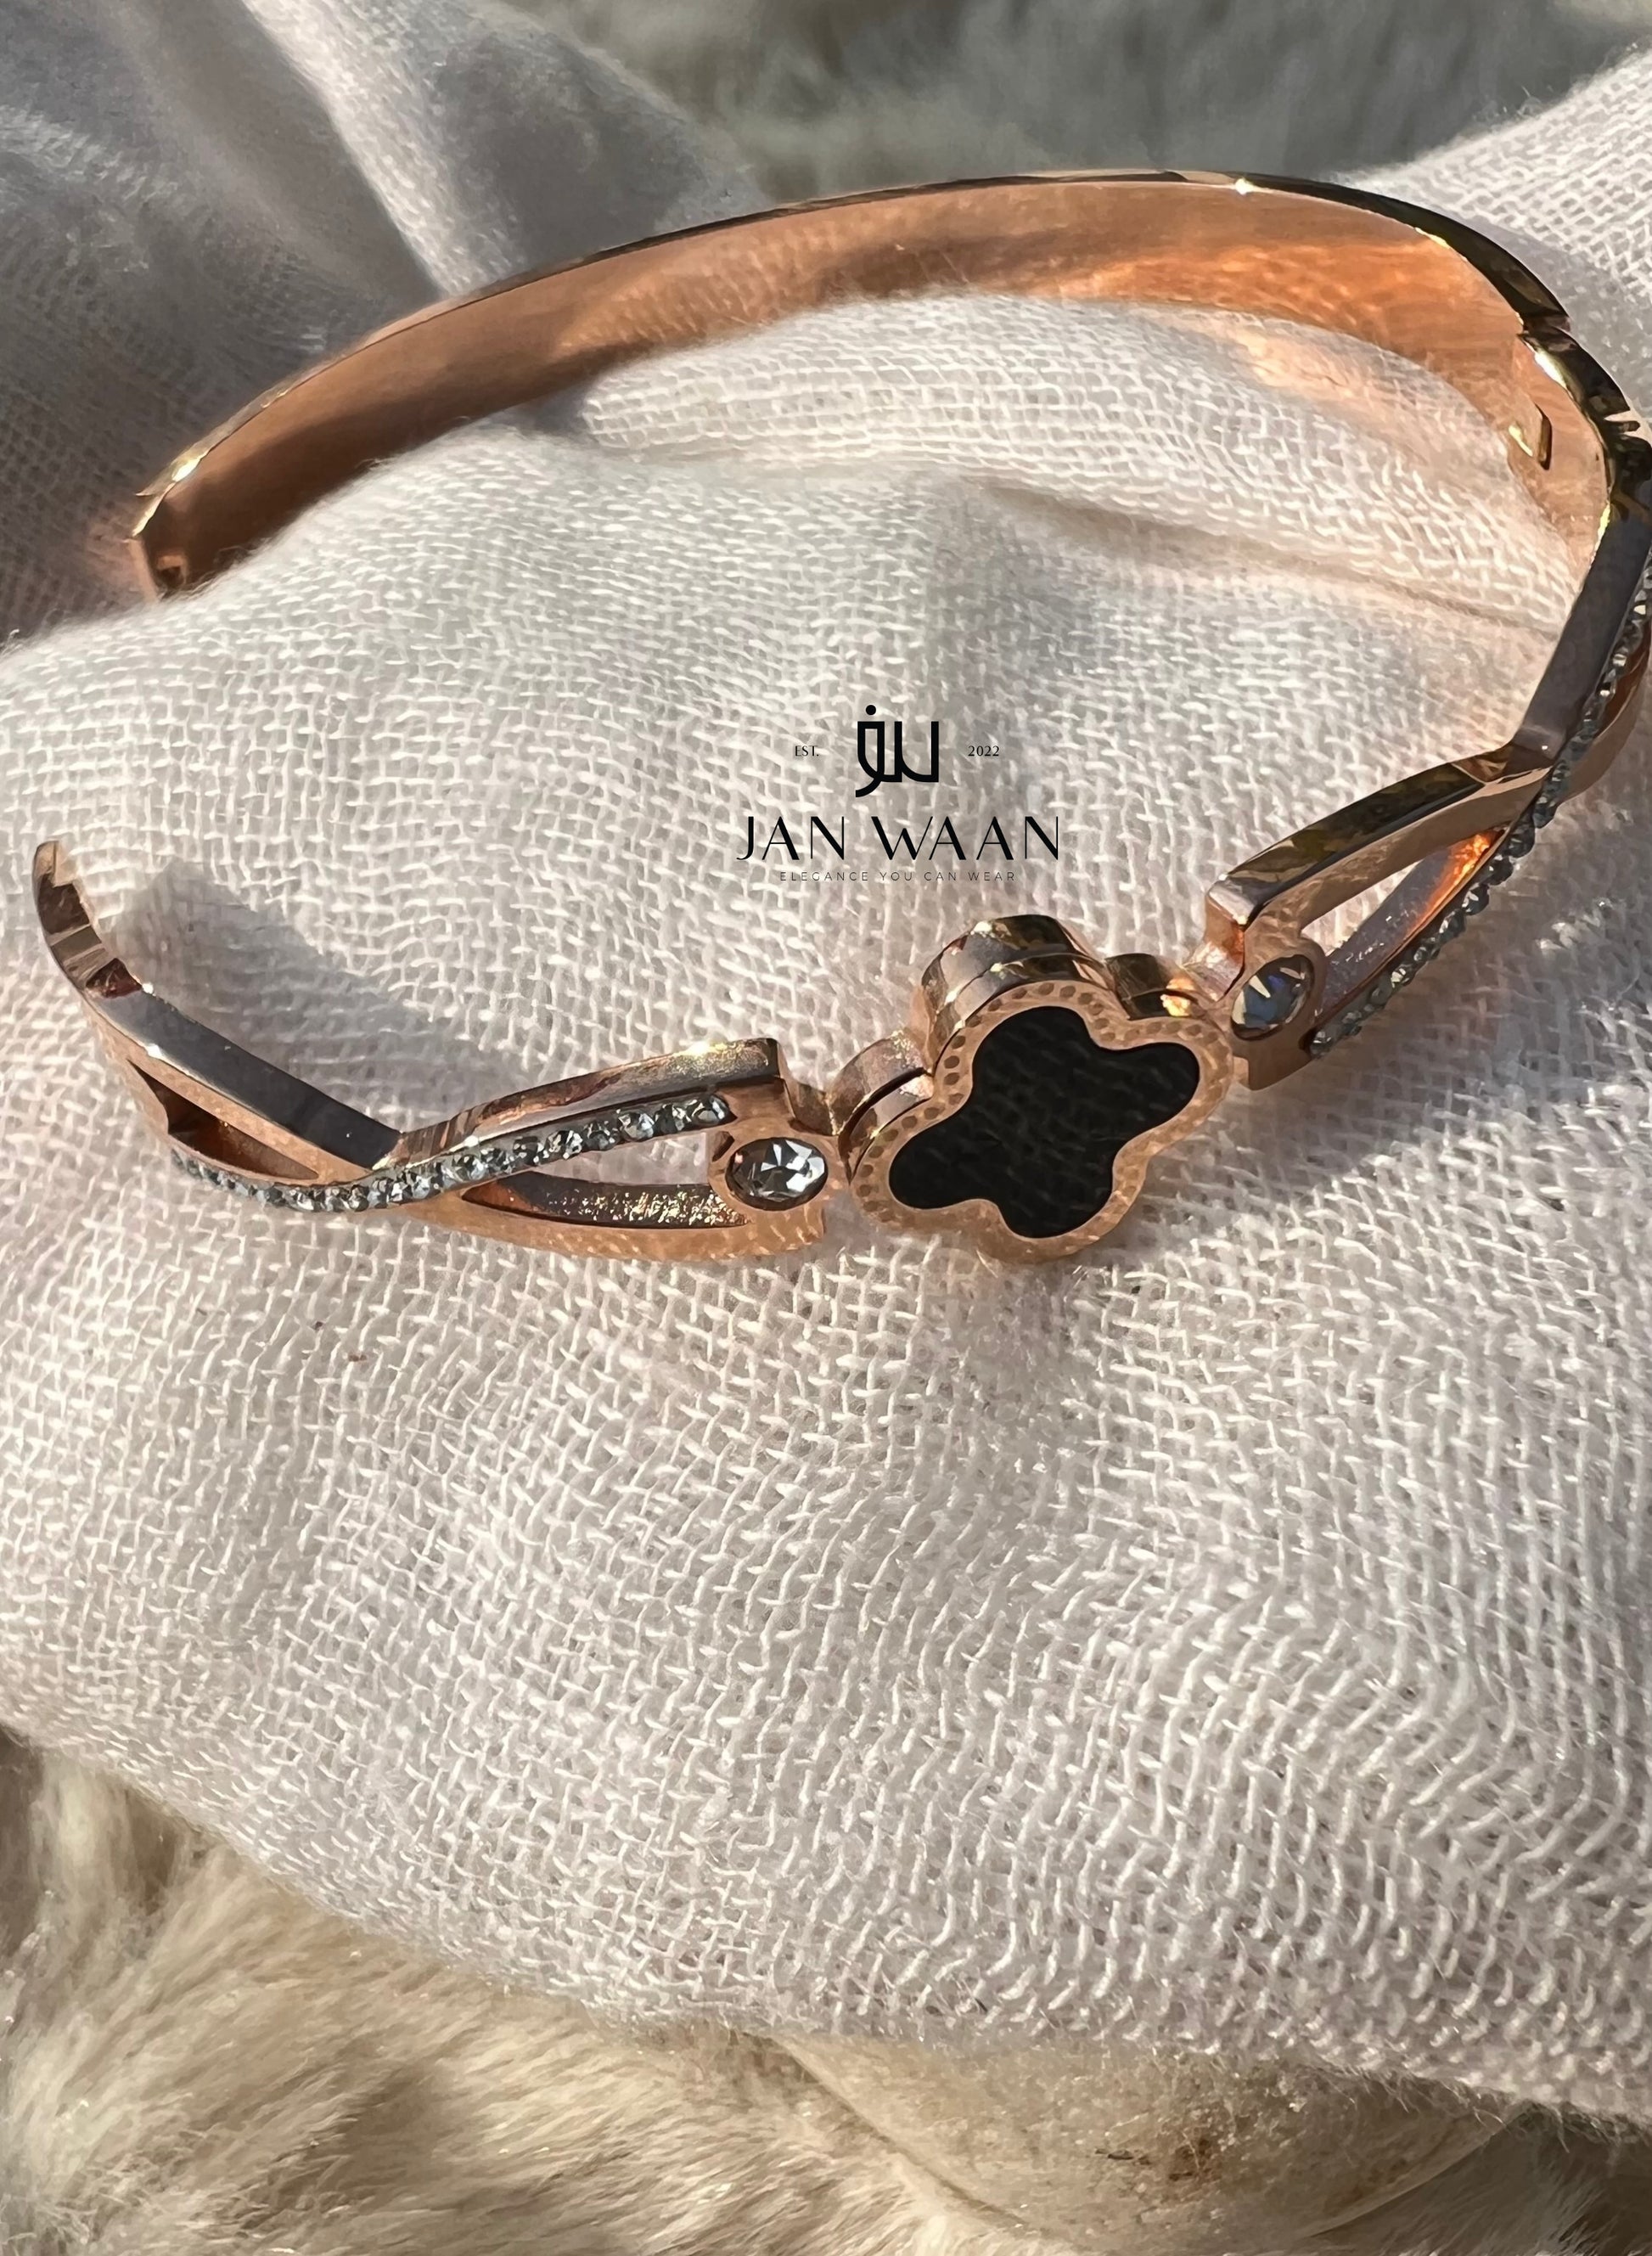 J&CO Jewellery Four Leaf Clover Bracelet